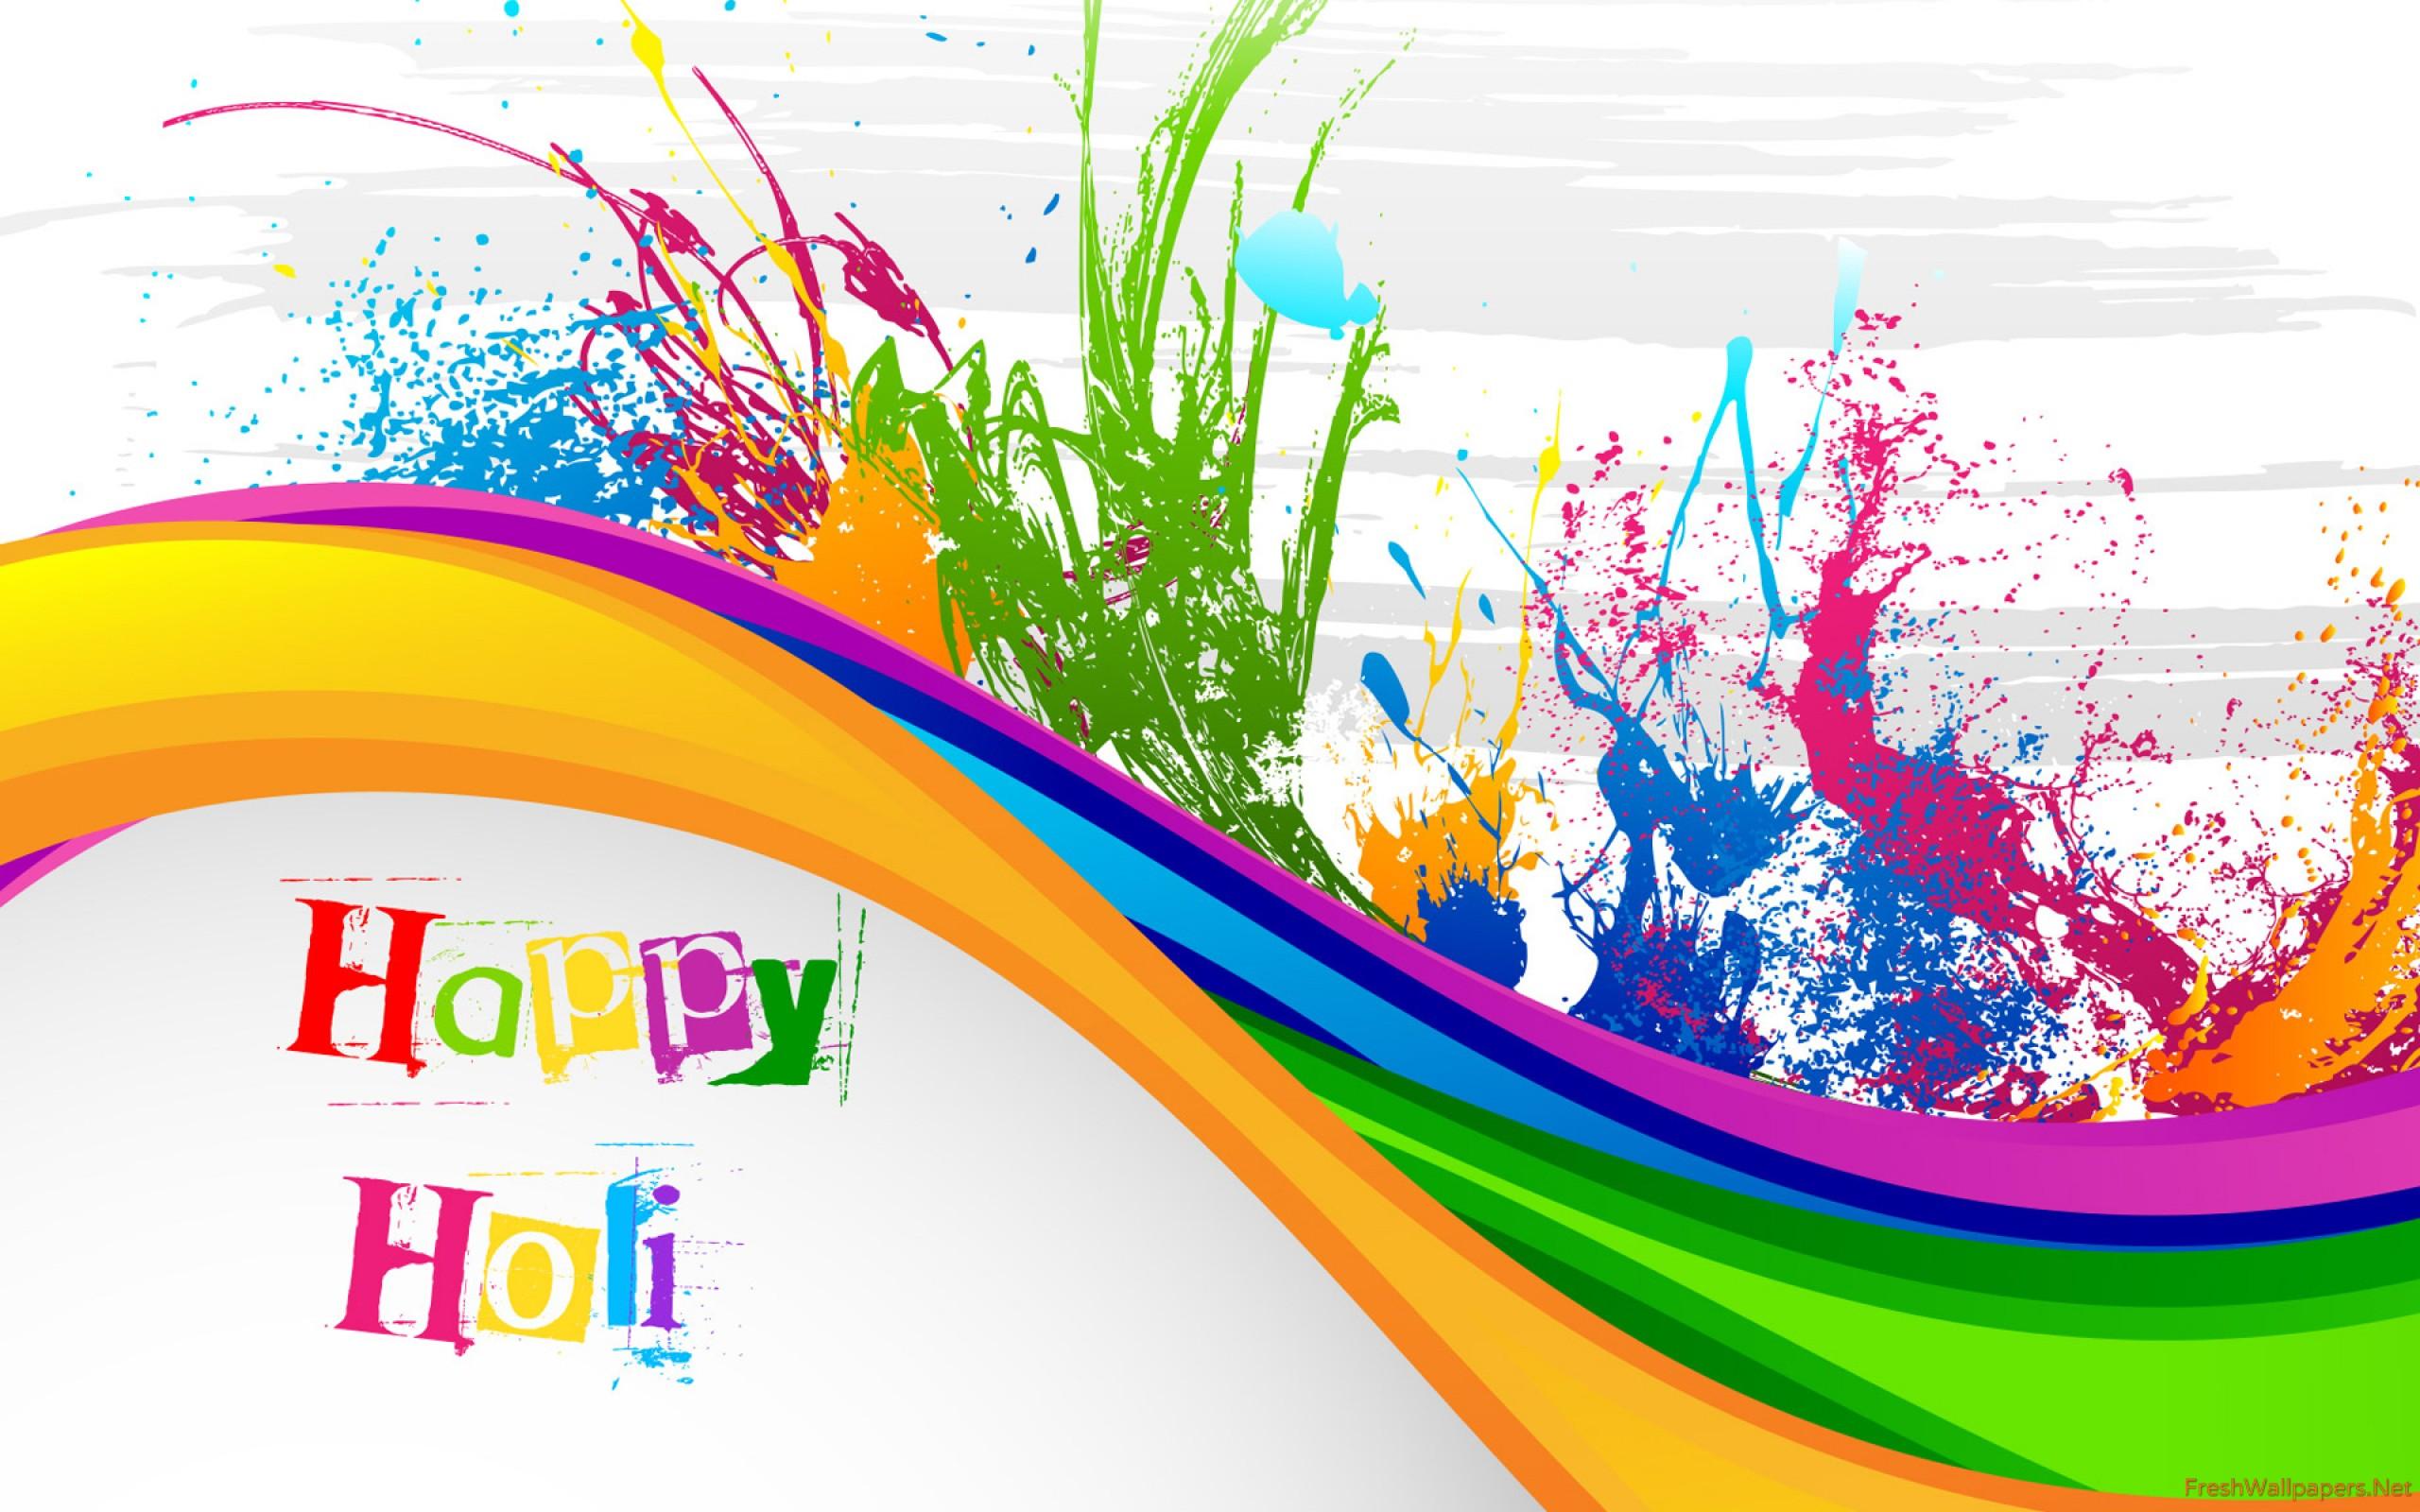 Happy Holi Festival of colors wallpaper